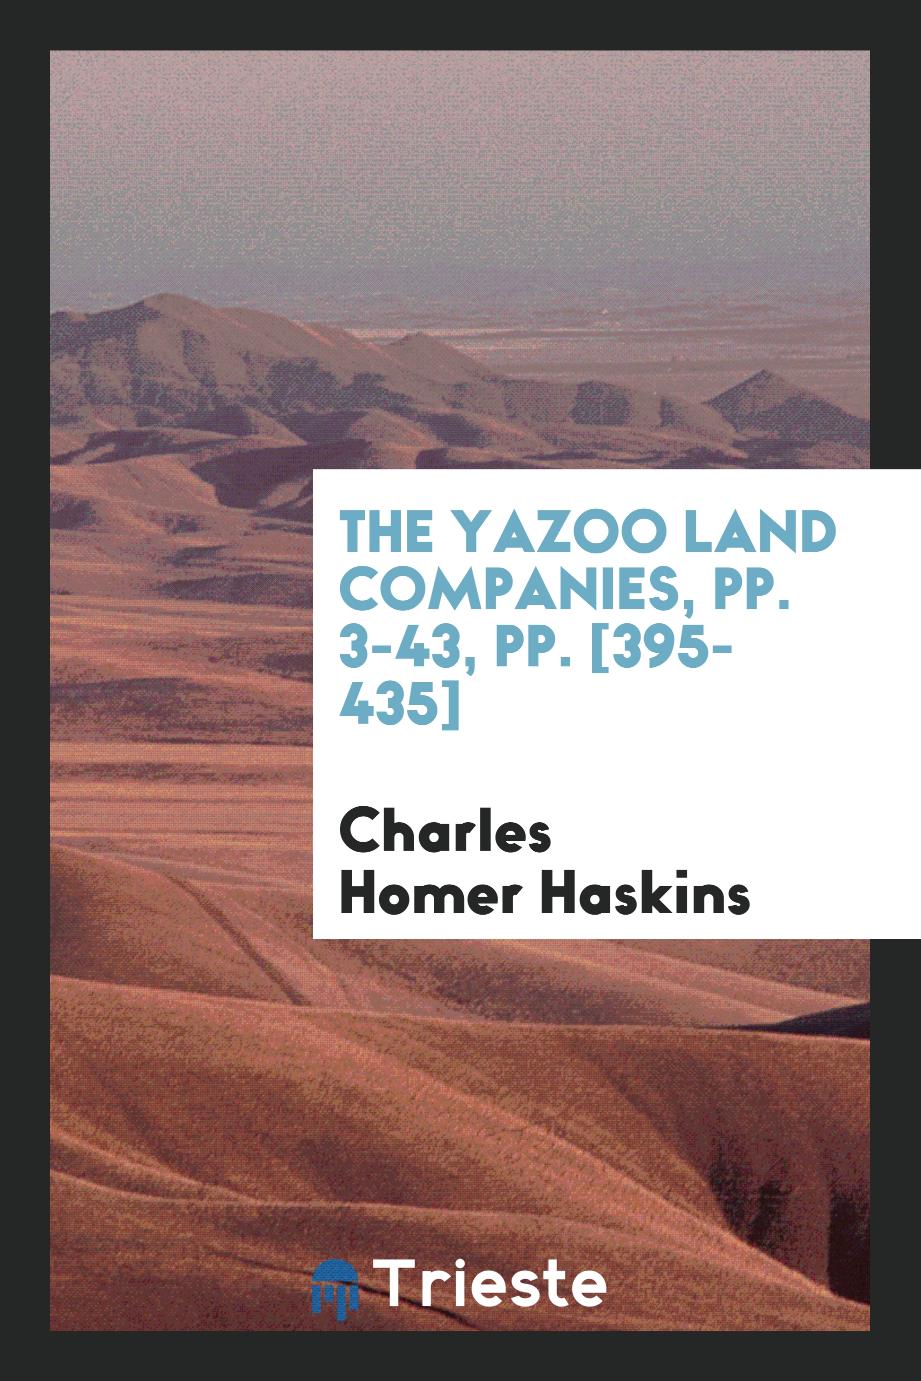 The Yazoo Land Companies, pp. 3-43, pp. [395-435]